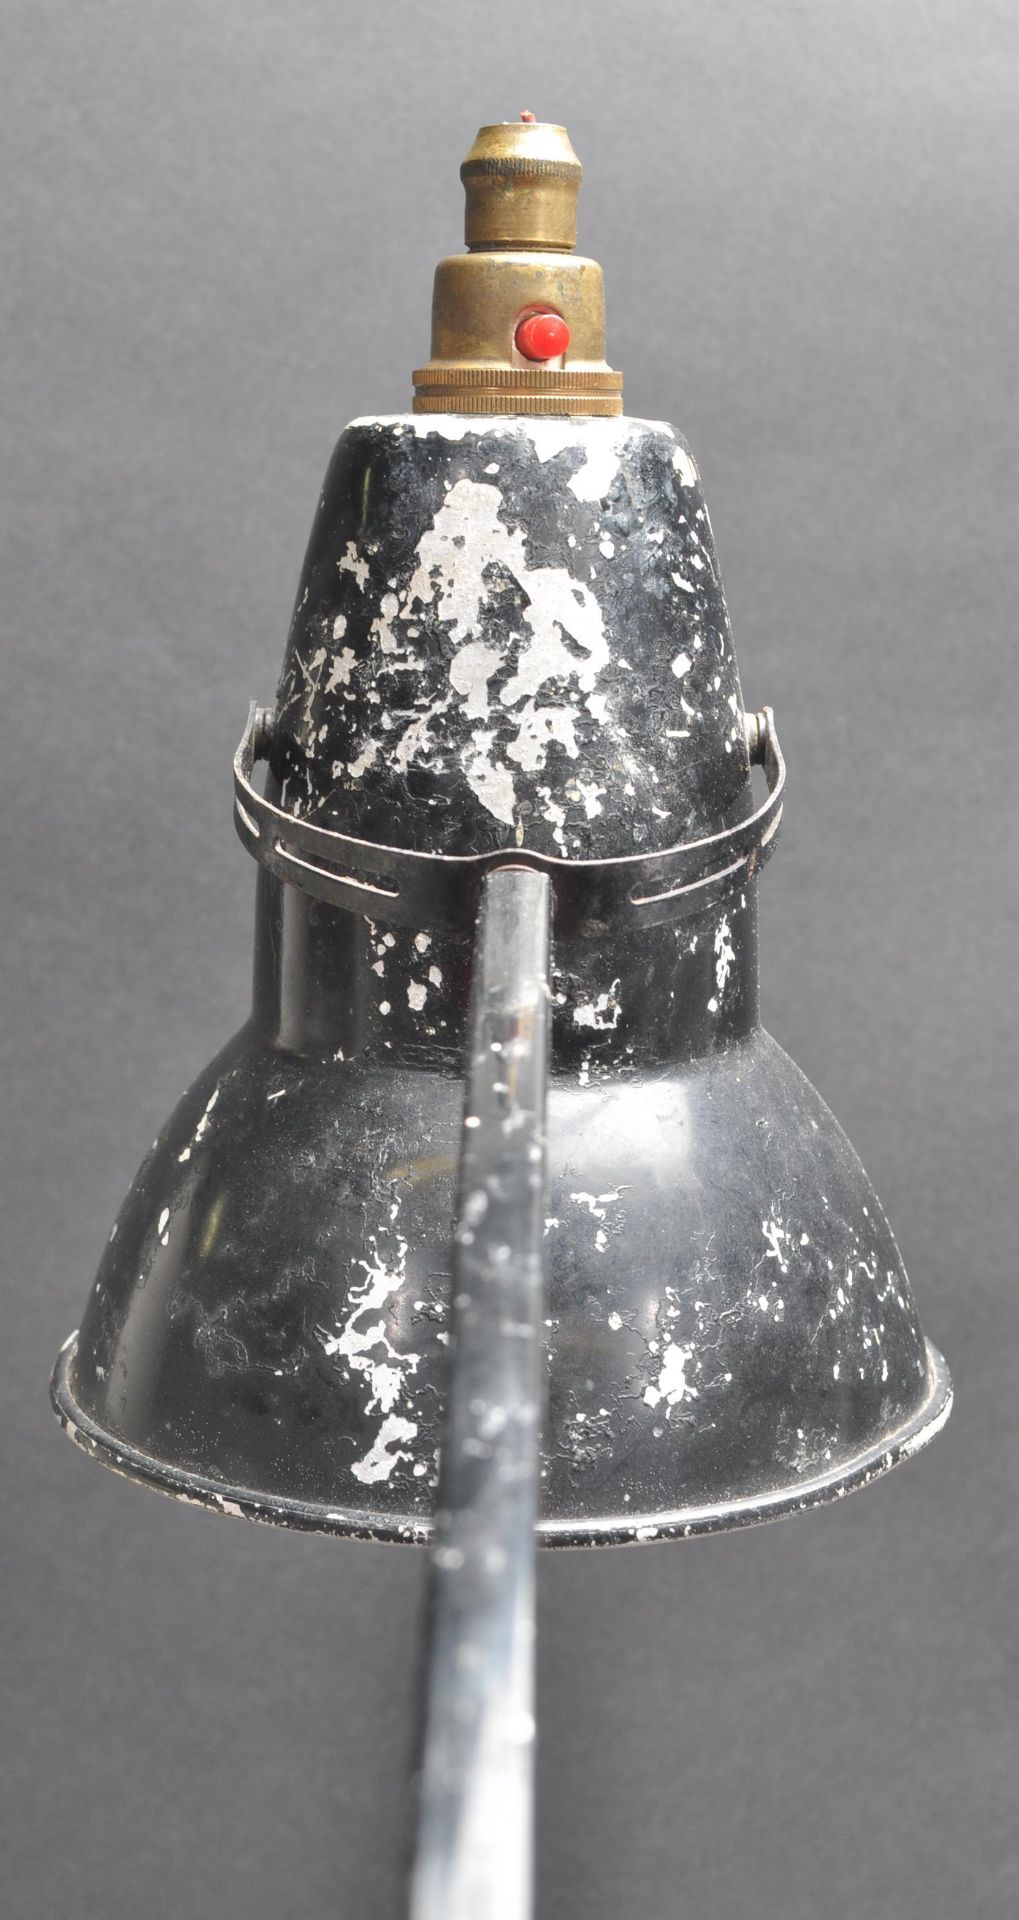 RETRO VINTAGE INDUSTRIAL HERBERT TERRY DESK LAMP - Image 5 of 7